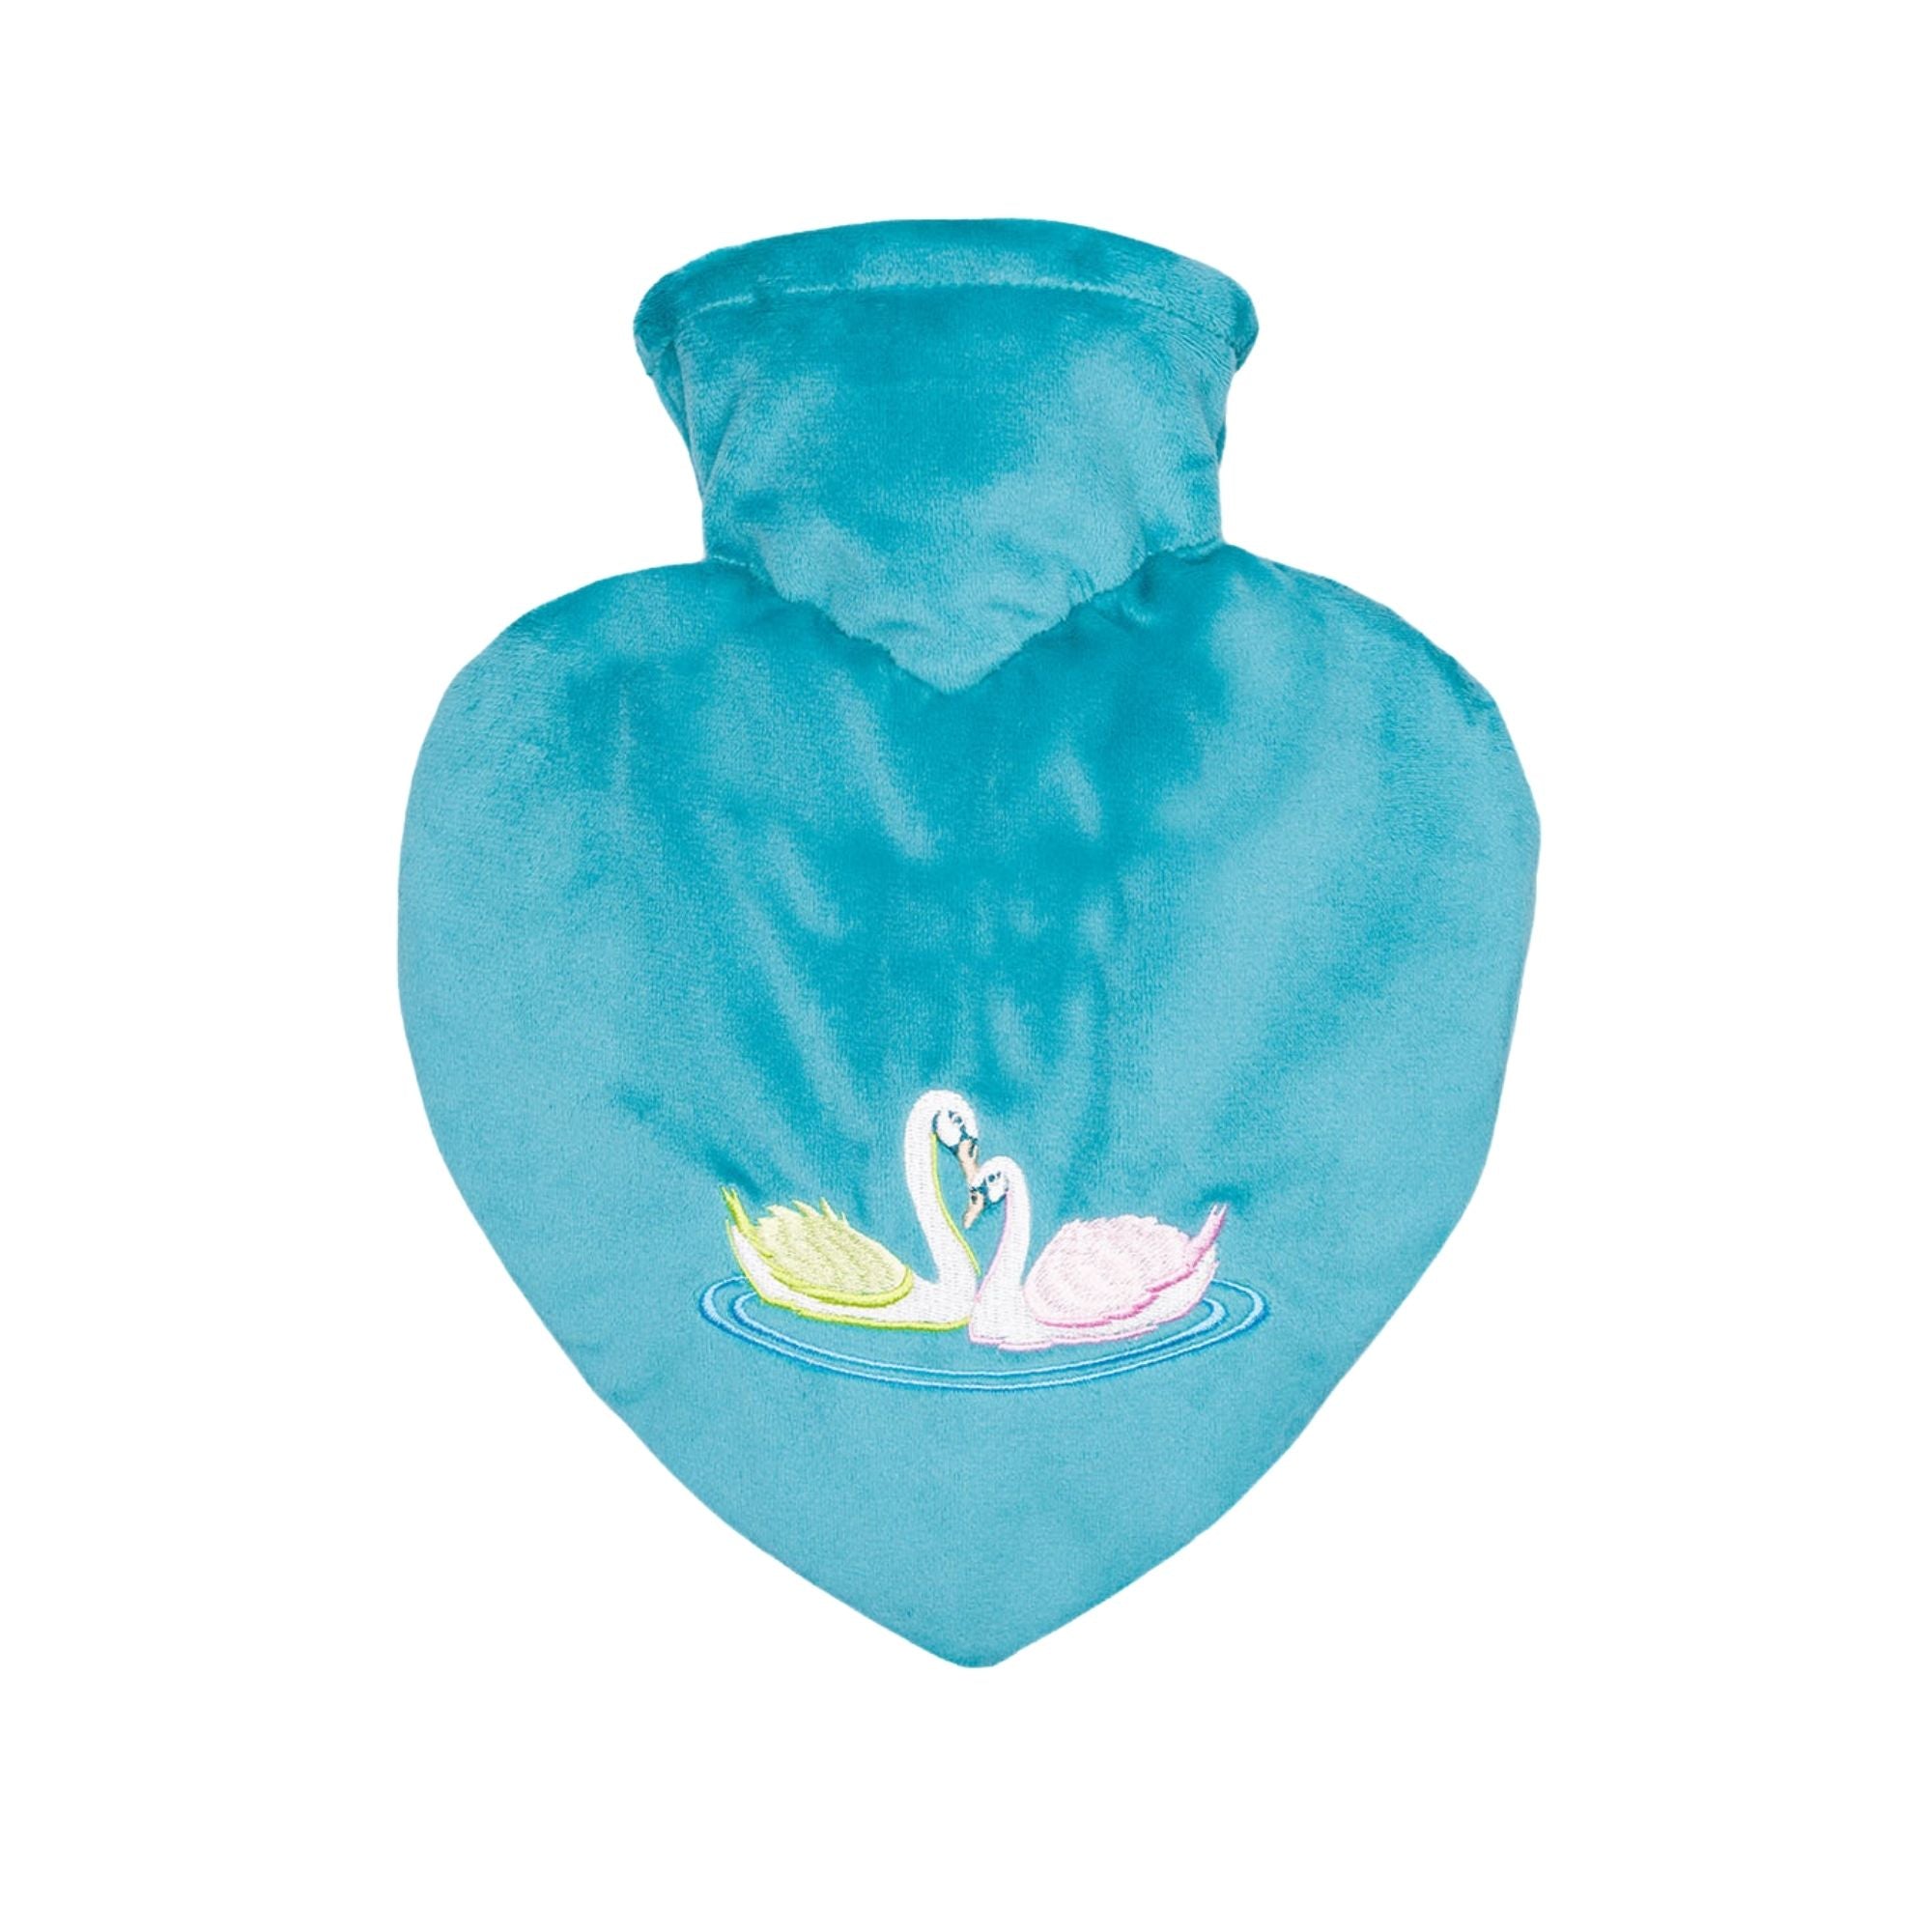 1 Litre Heart Shaped Hot Water Bottle with Velvet Swans Cover (rubberless)